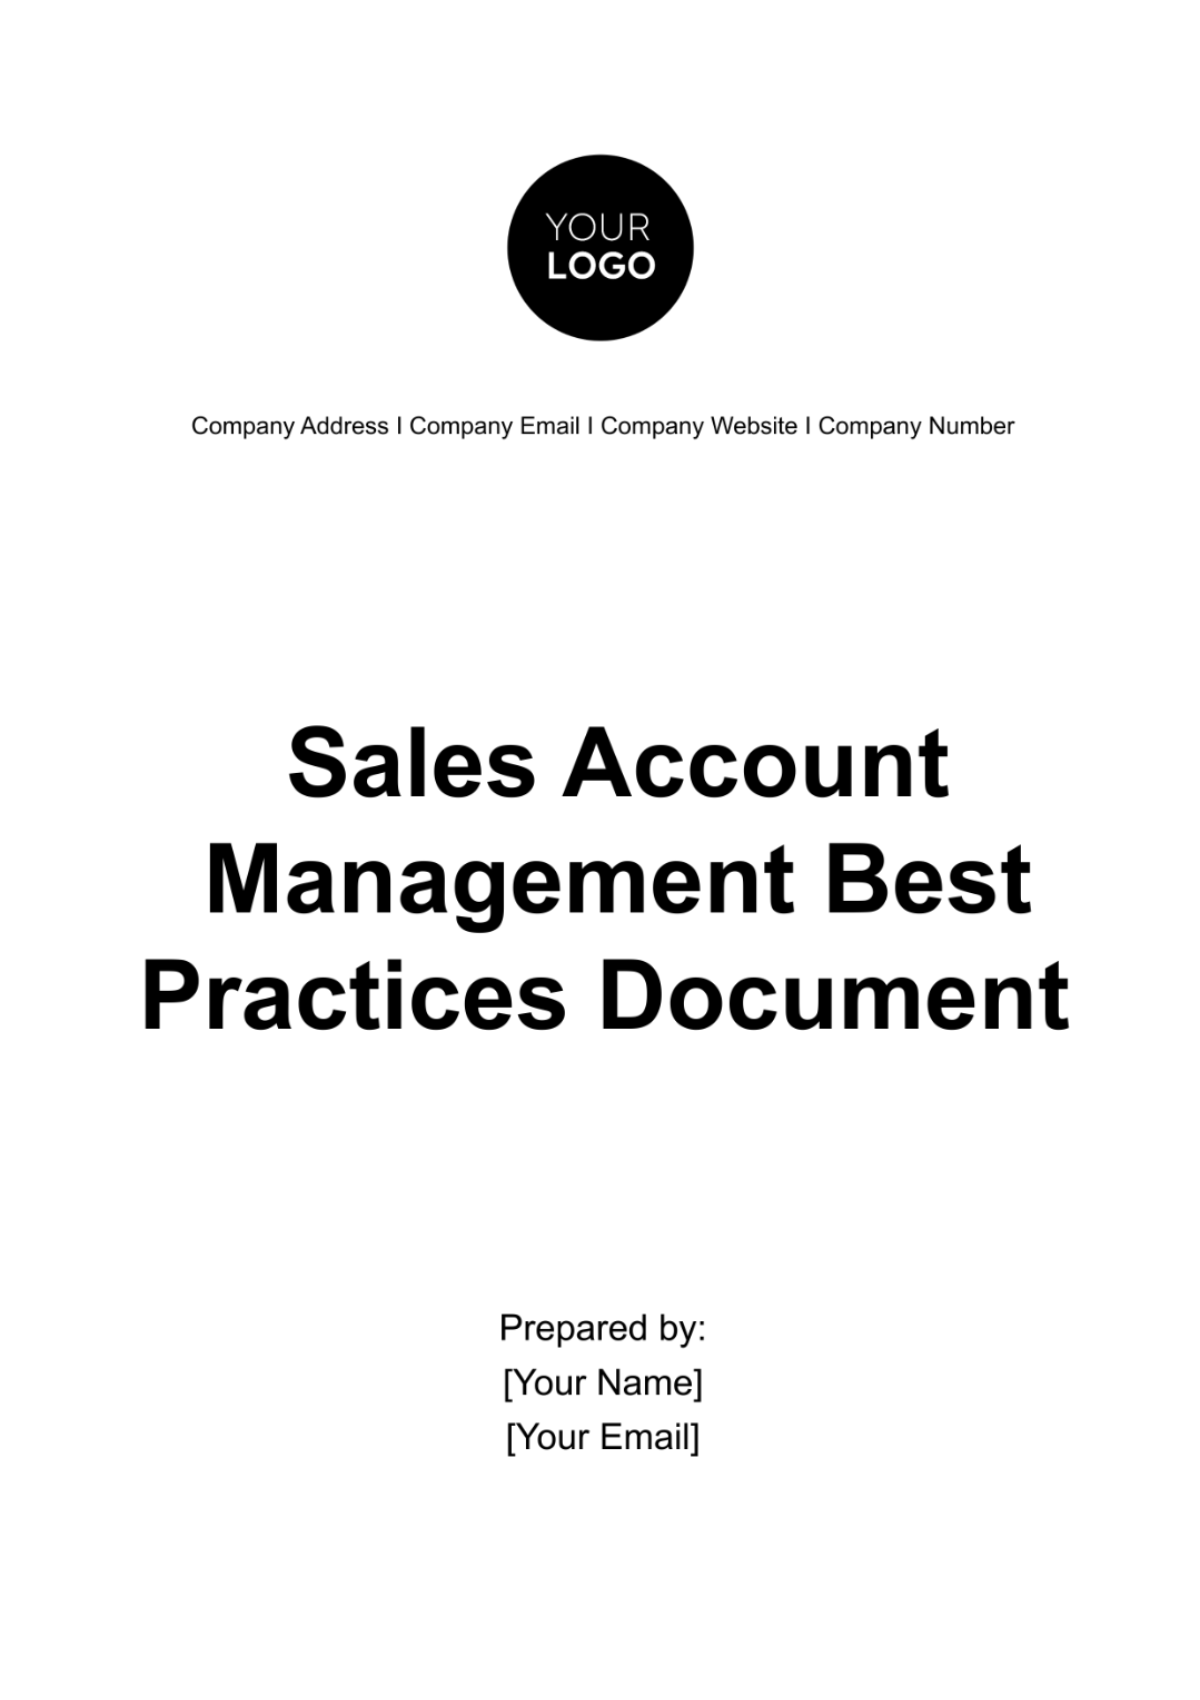 Sales Account Management Best Practices Document Template